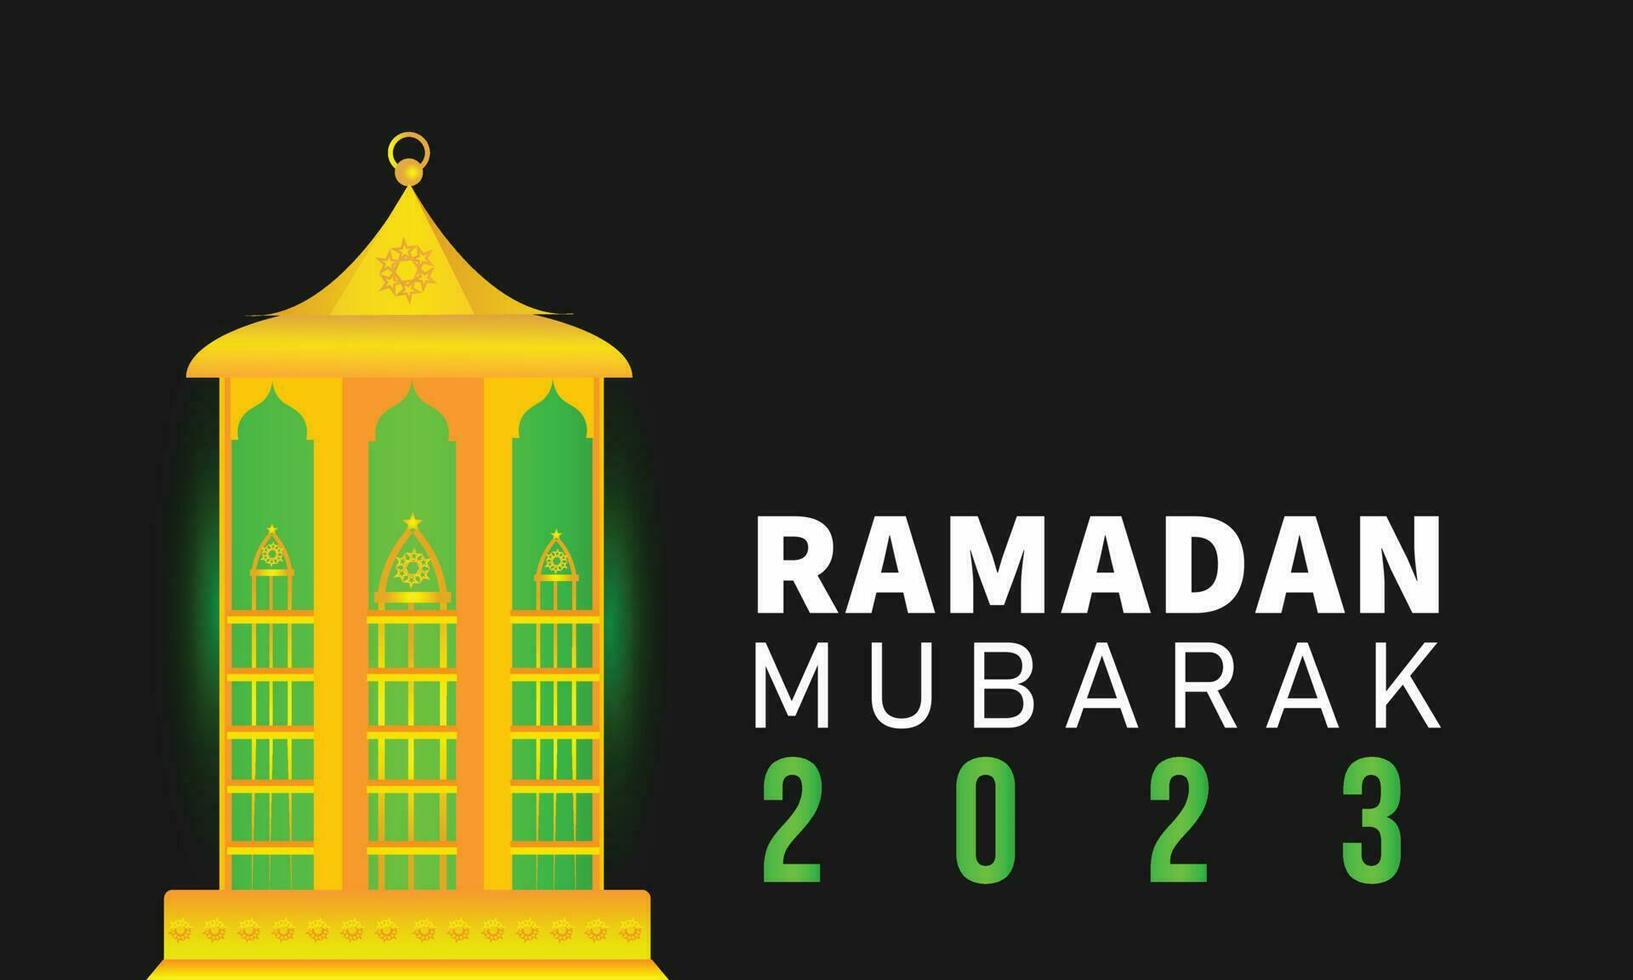 Ramadan Kareem greeting. islamic design, gold color,card, ramadan background vector